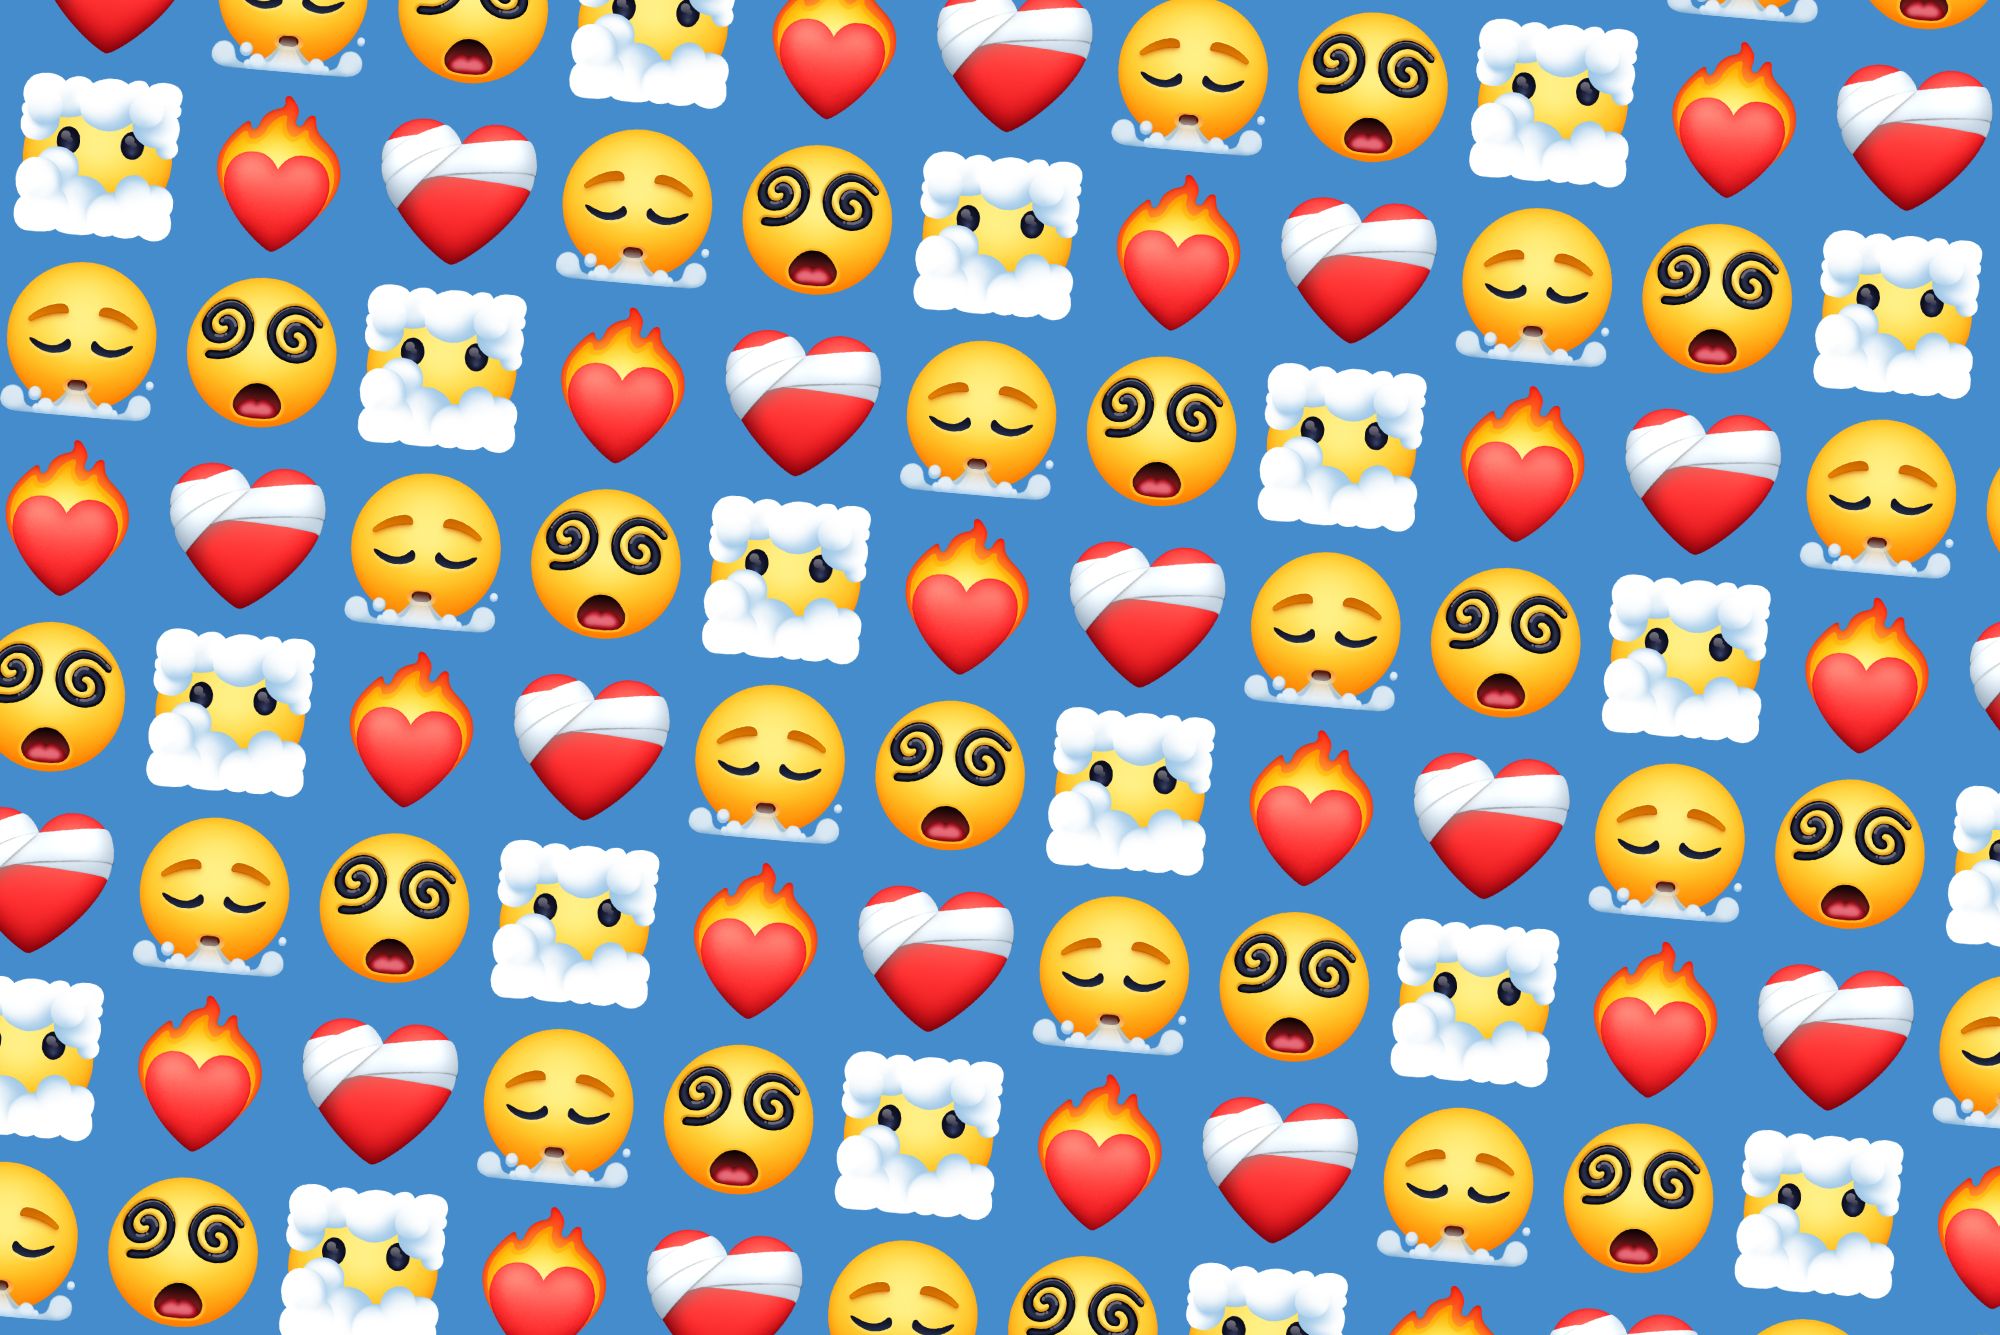 how to make facebook emoji